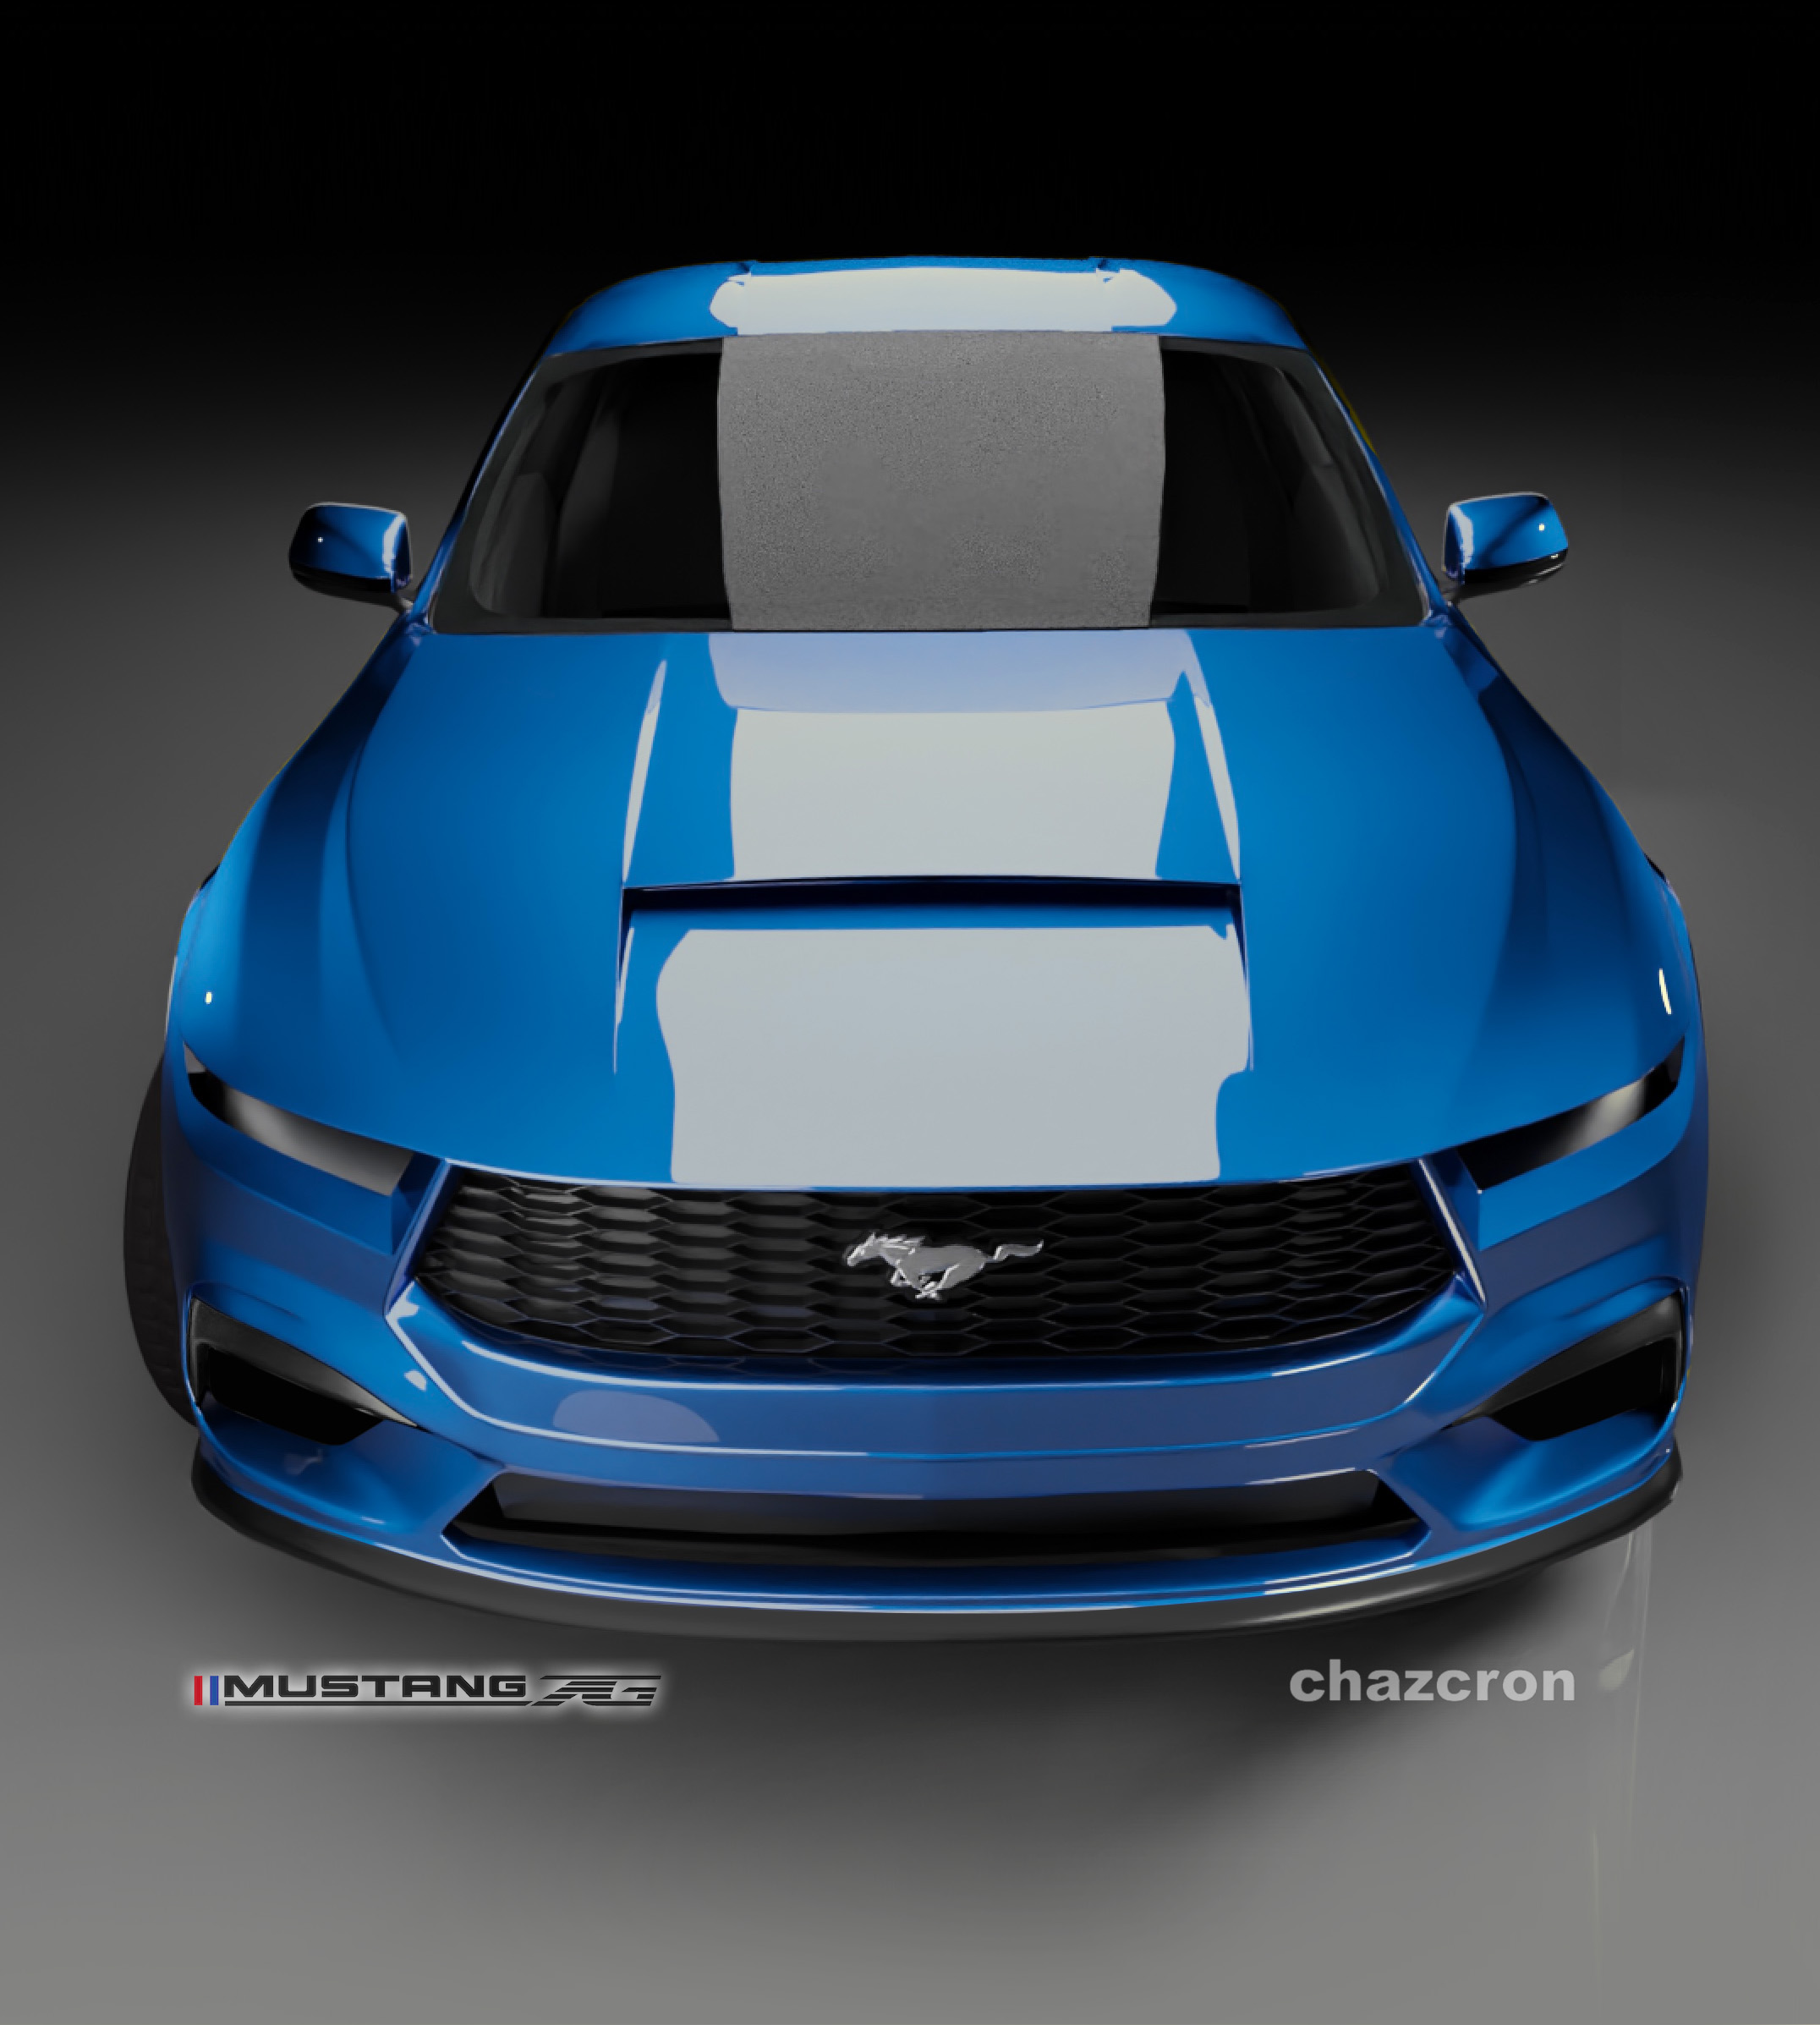 S650 Mustang chazcron weighs in... 7th gen 2023 Mustang S650 3D model & renderings in several colors! bluestang-